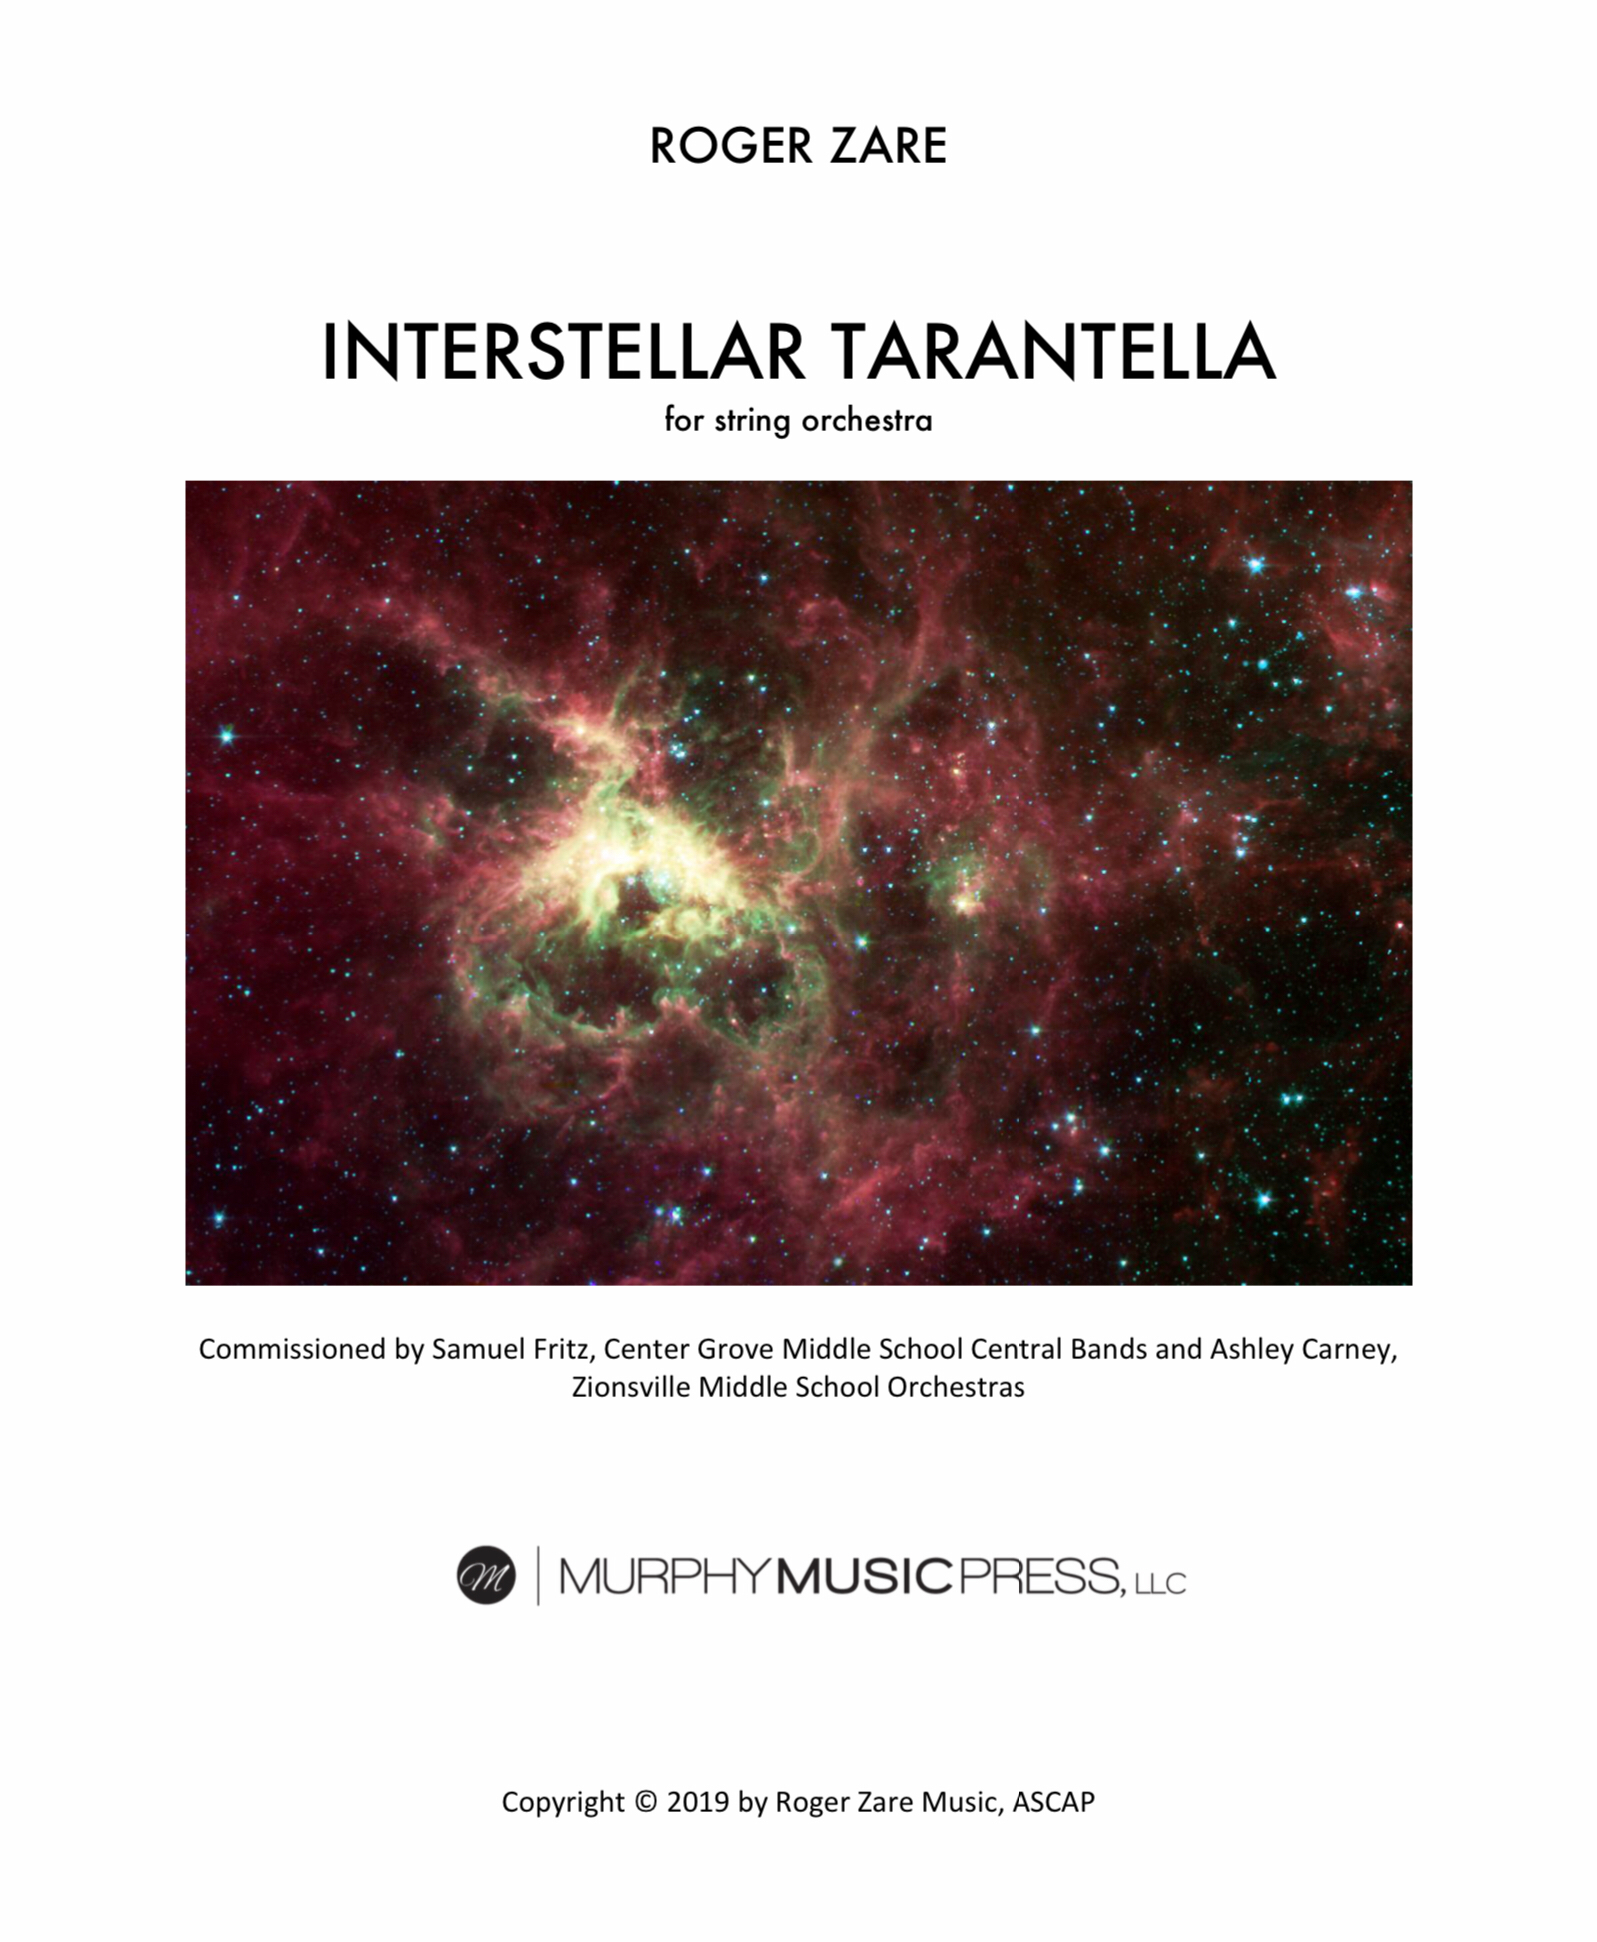 Interstellar Tarantella (String Orchestra Version) by Roger Zare